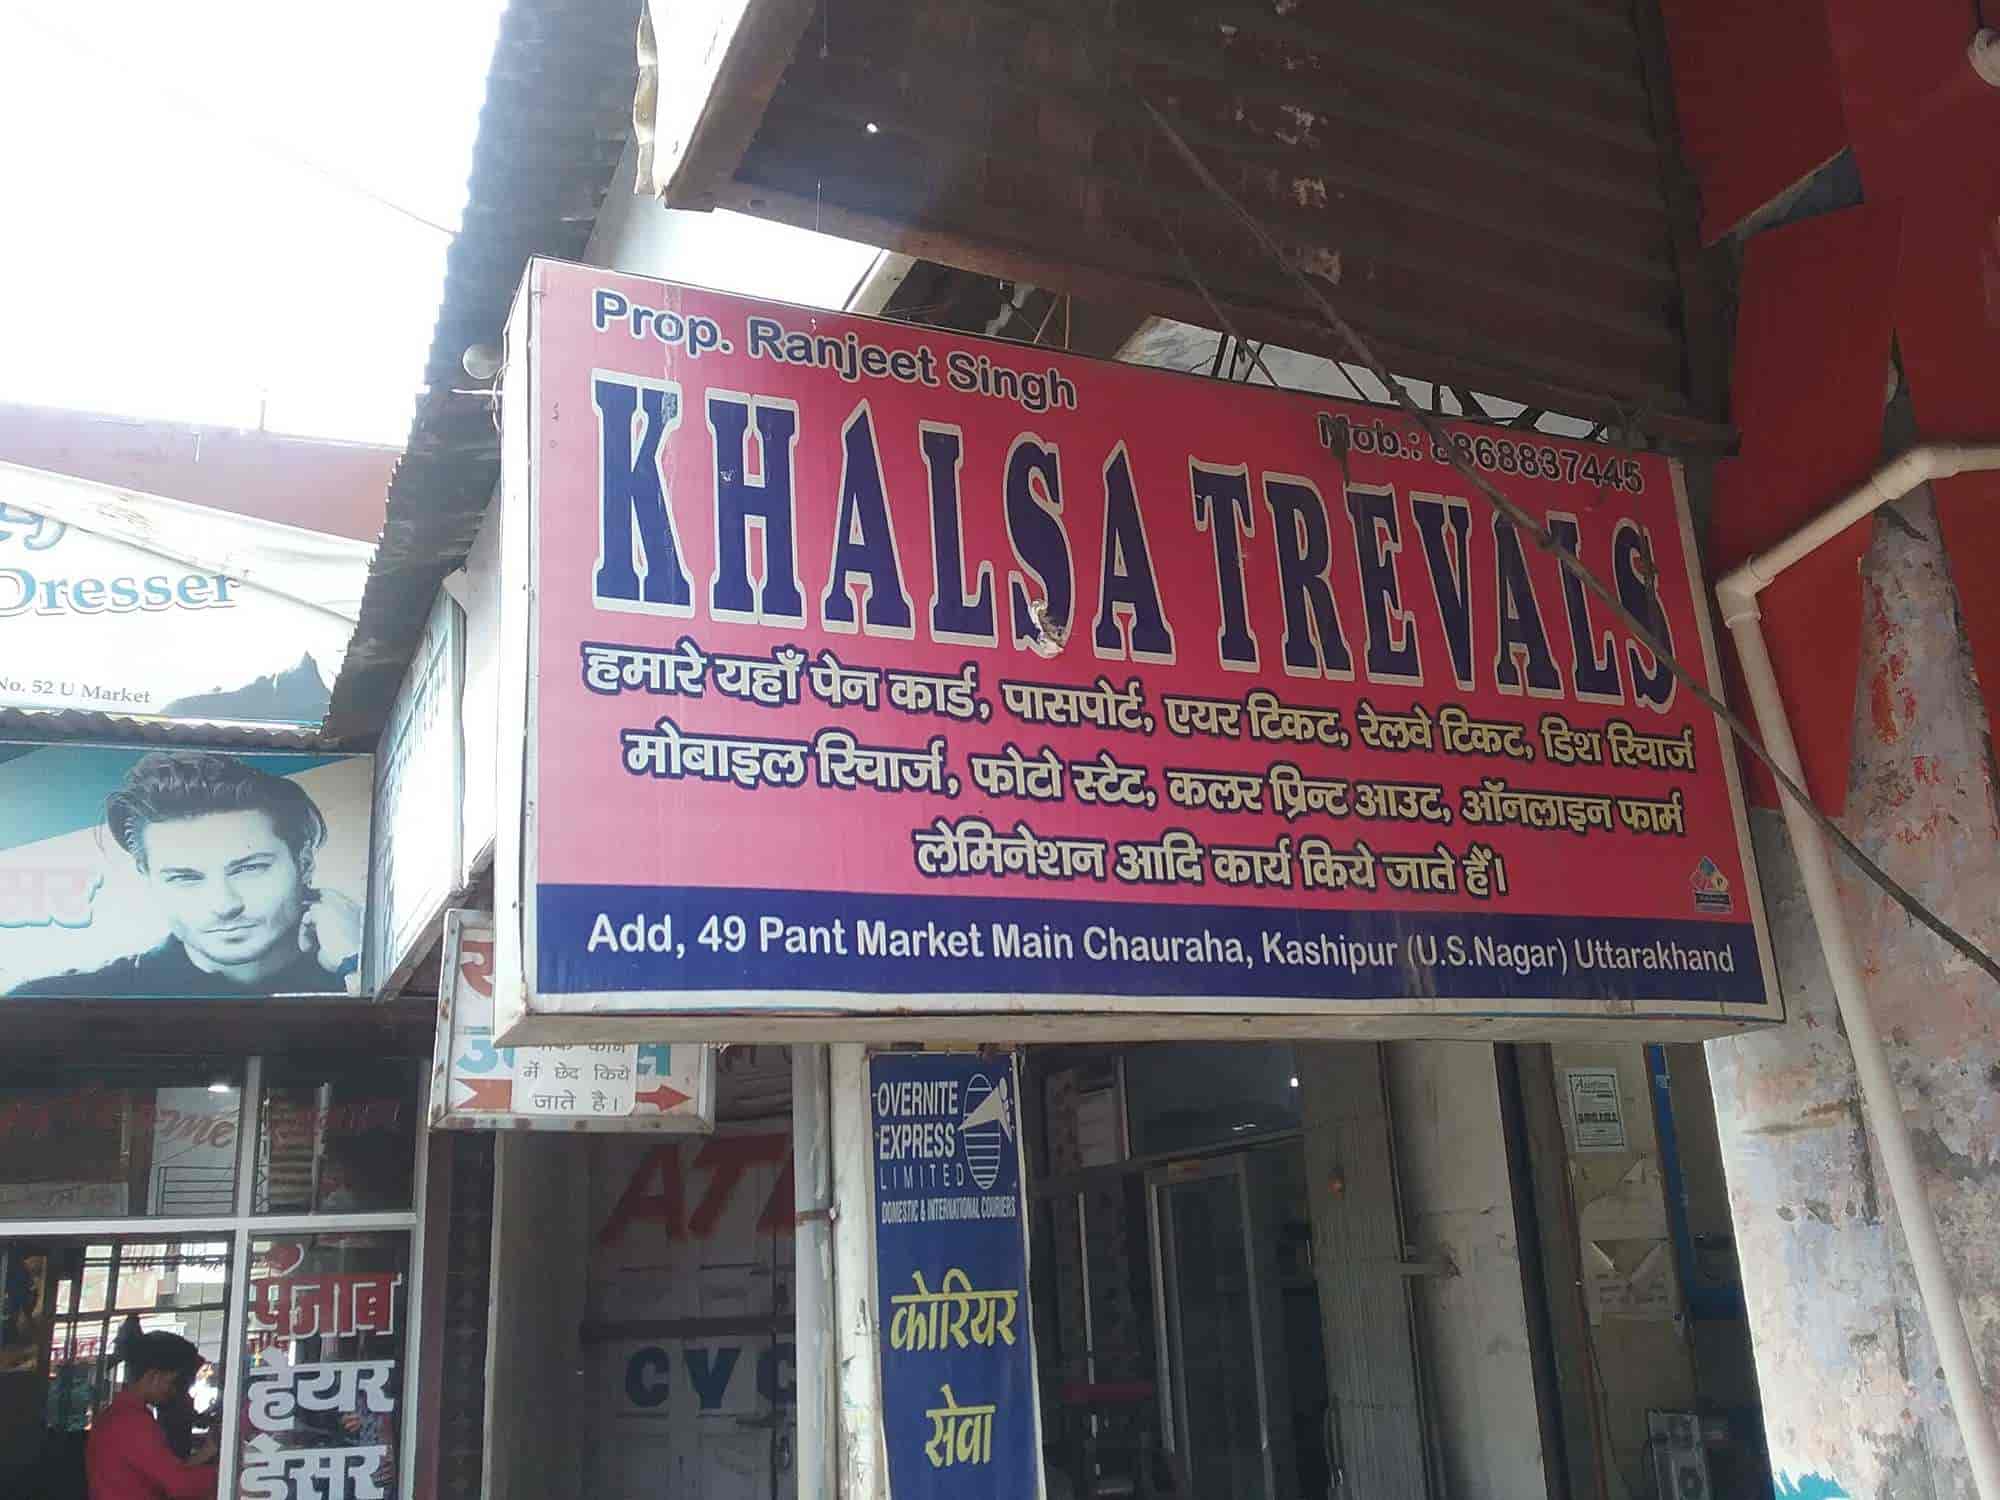 khalsa travel near me